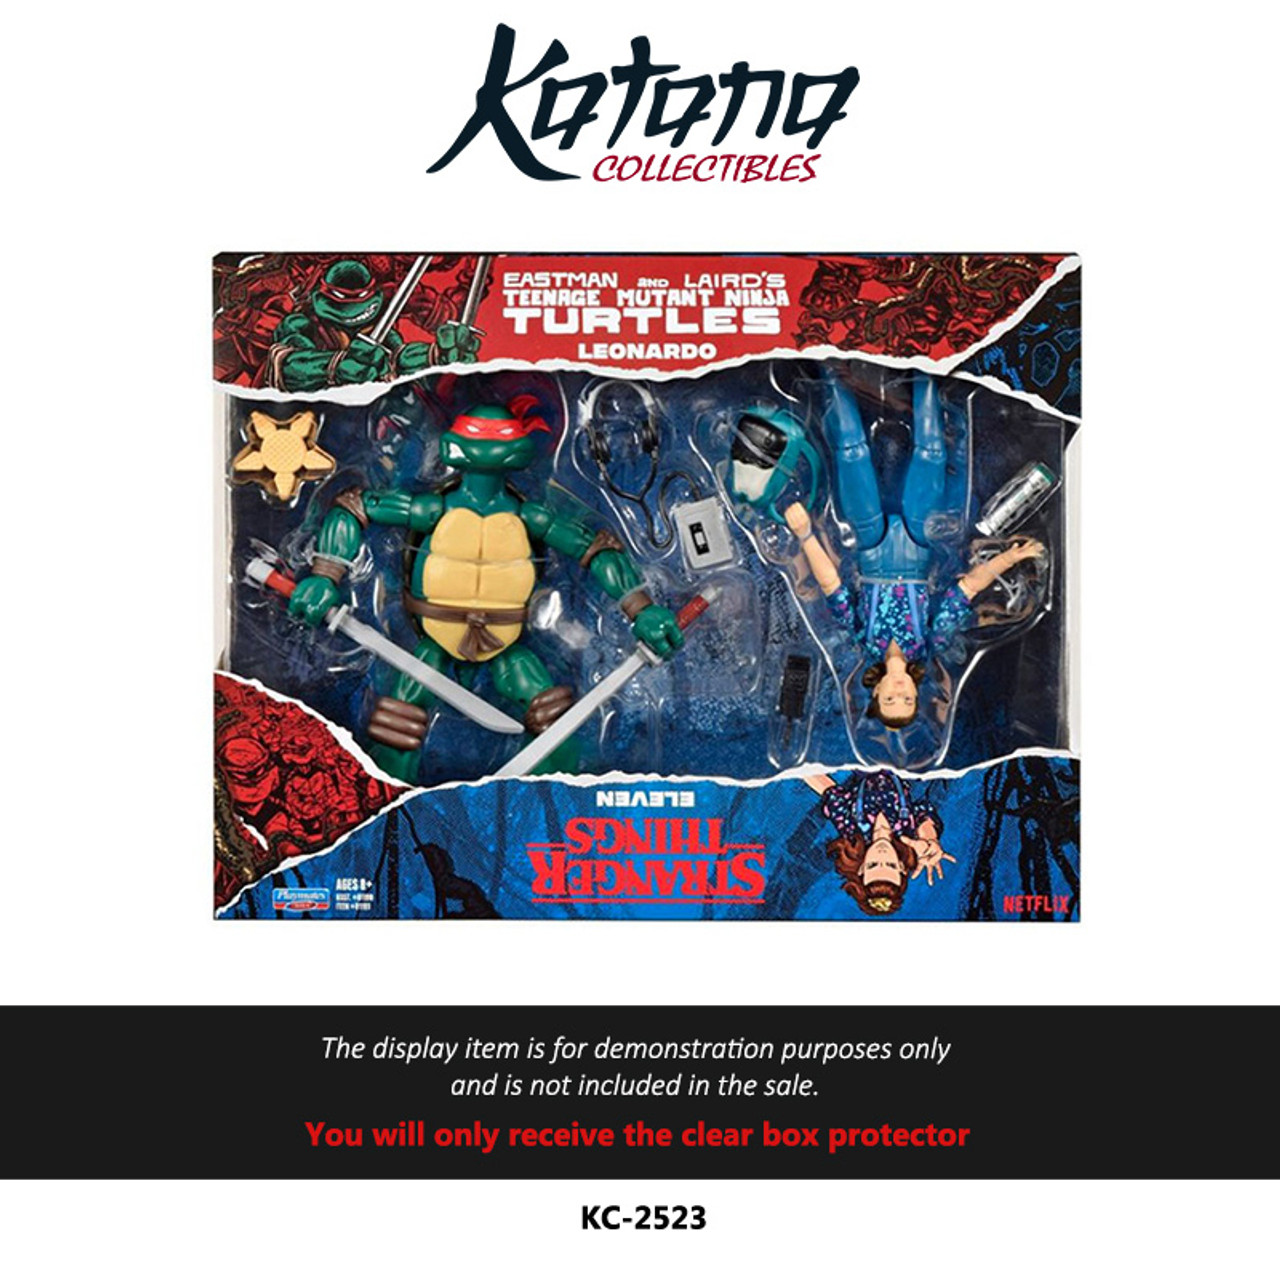 Katana Collectibles Protector For Teenage Mutant Ninja Turtles Stranger Things Figures